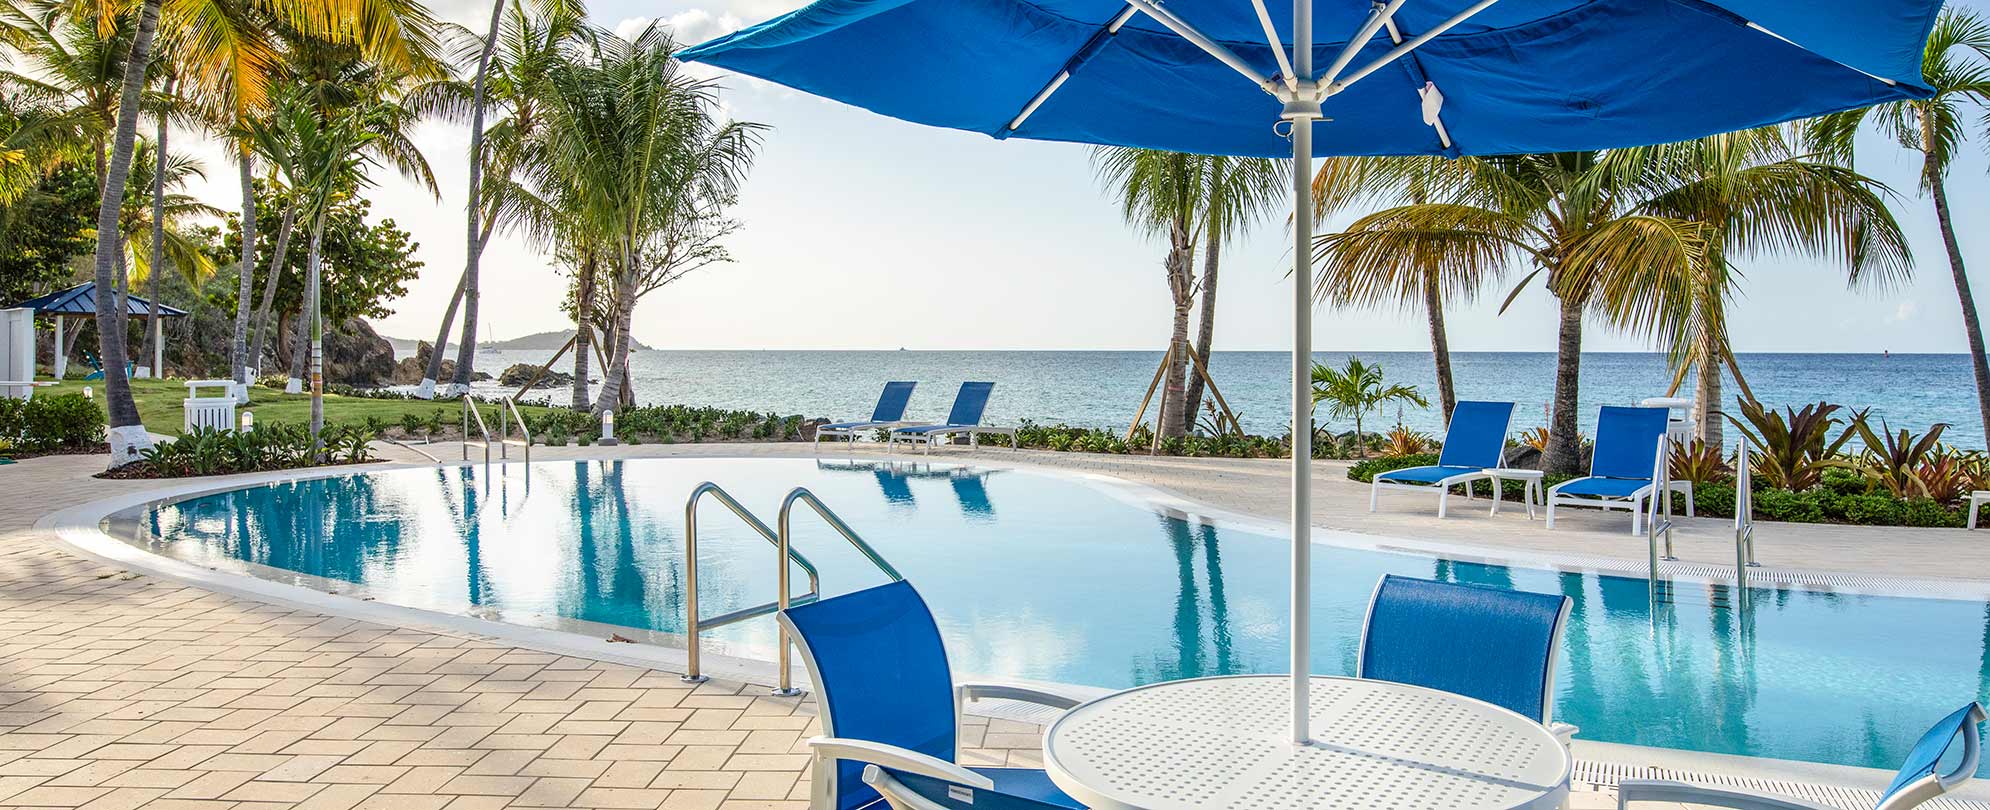 A WorldMark by Wyndham resort-style pool that overlooks beach views.